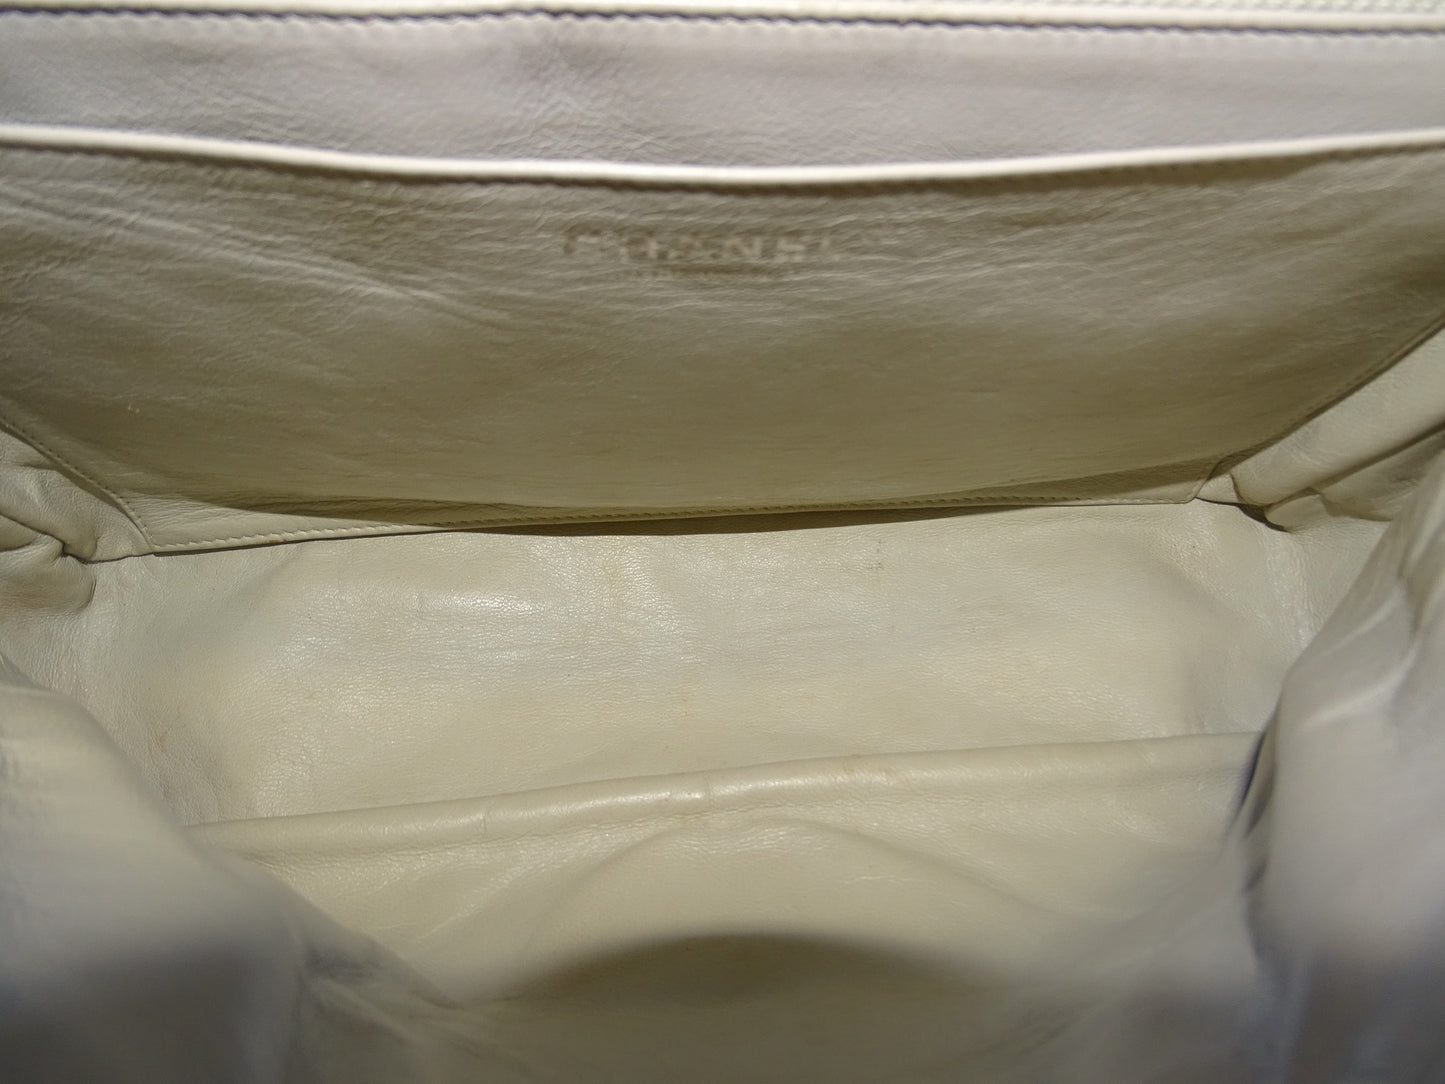 Chanel Gold Crinkled Patent Leather Seasonal Single Flap Bag 2008/09